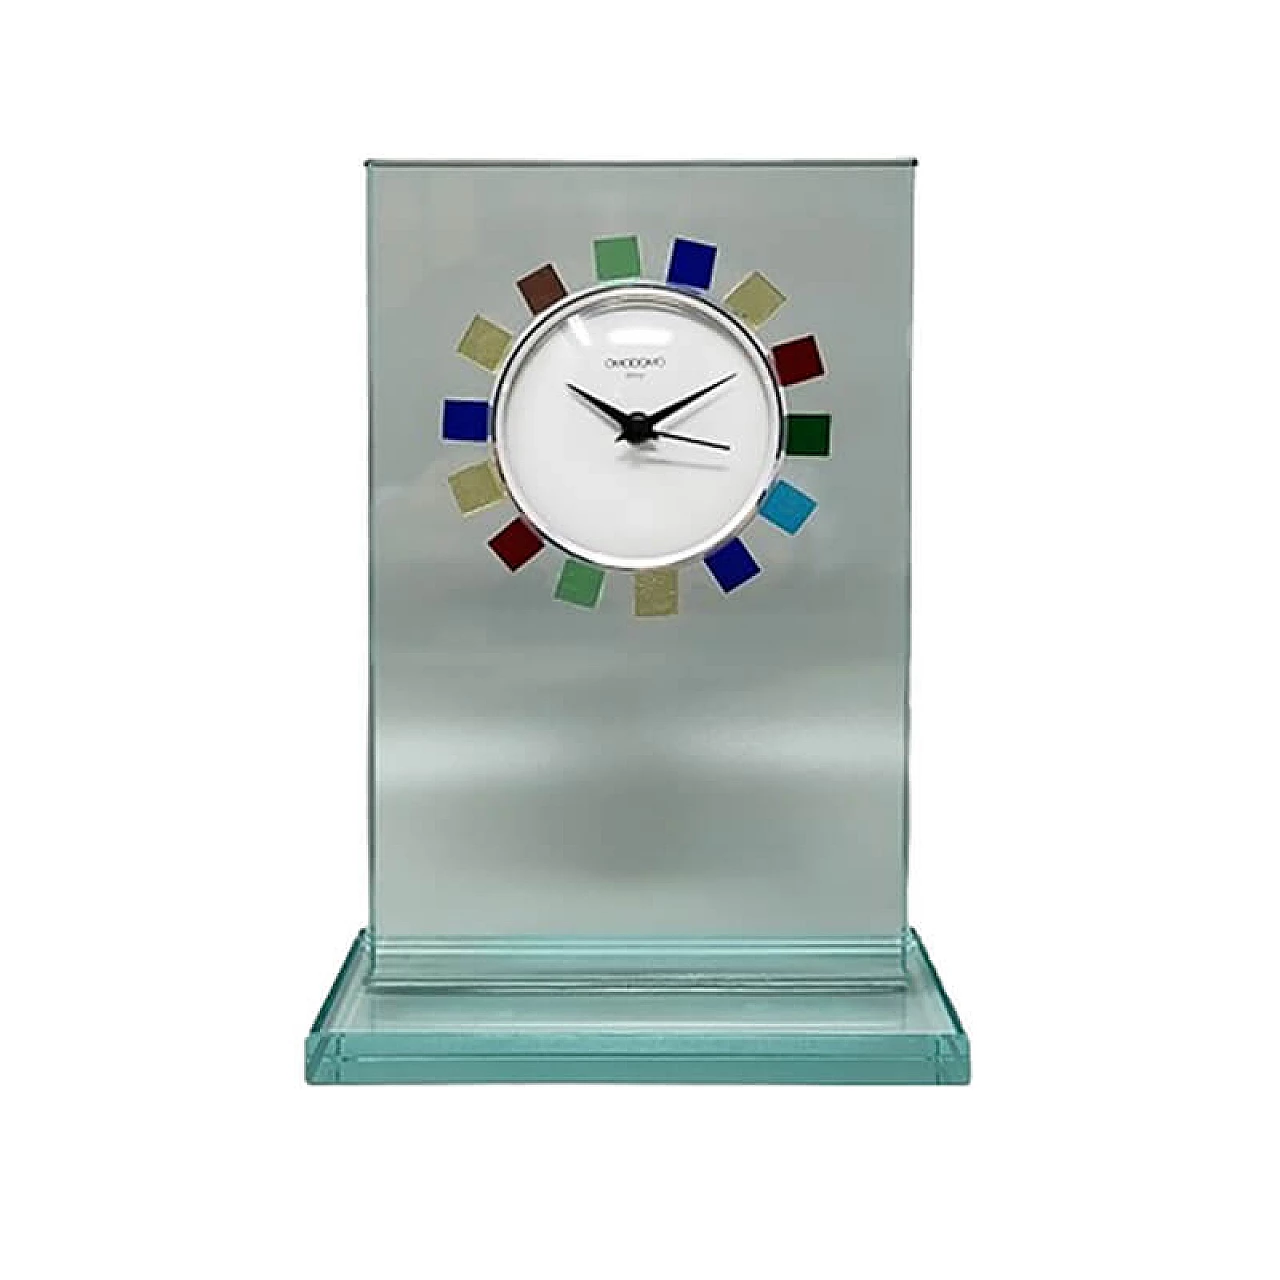 Omodomo crystal table clock, 1970s 1